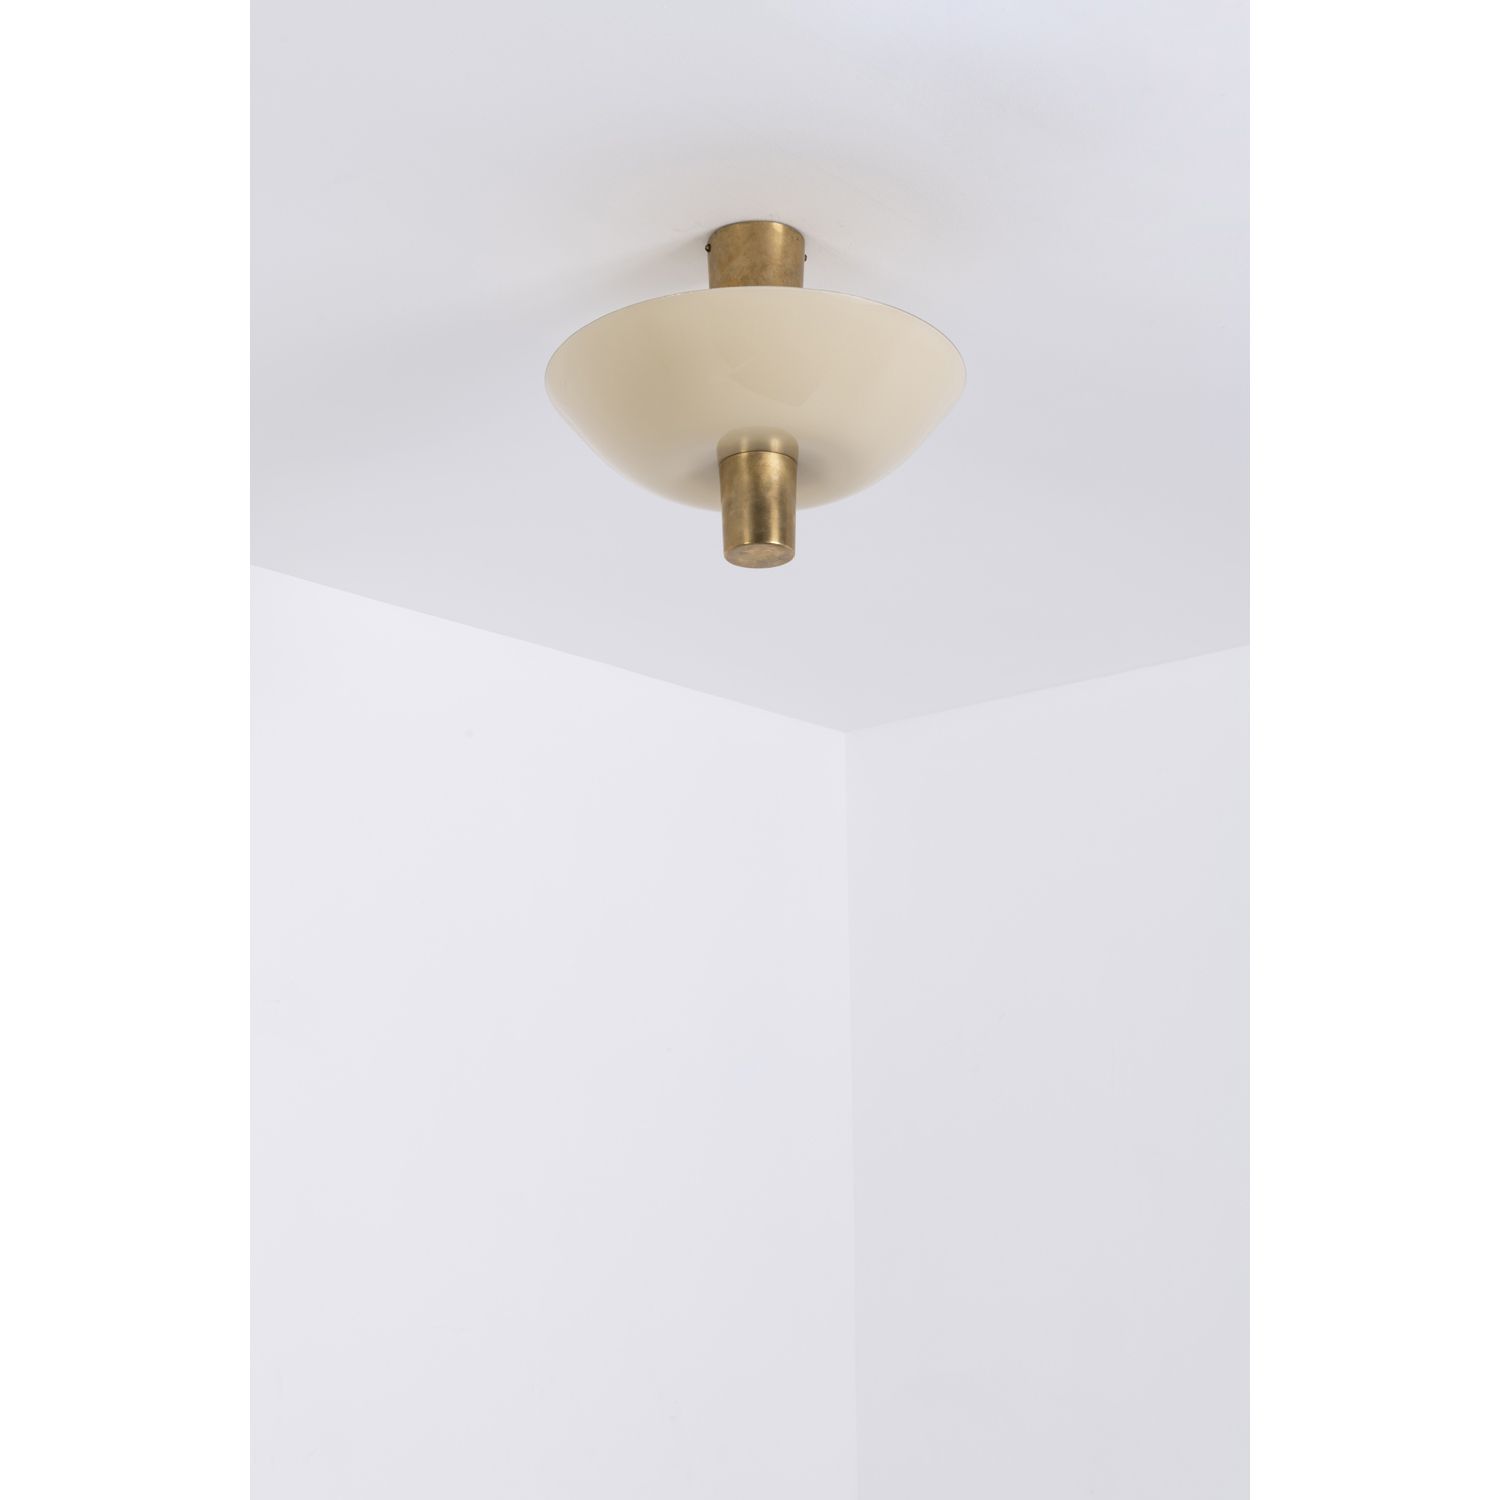 Null 帕沃-泰内尔(1890-1973)

吸顶灯

黄铜和有色不透明玻璃

Taito Oy版

设计于20世纪50年代

高33 × 直径40厘米